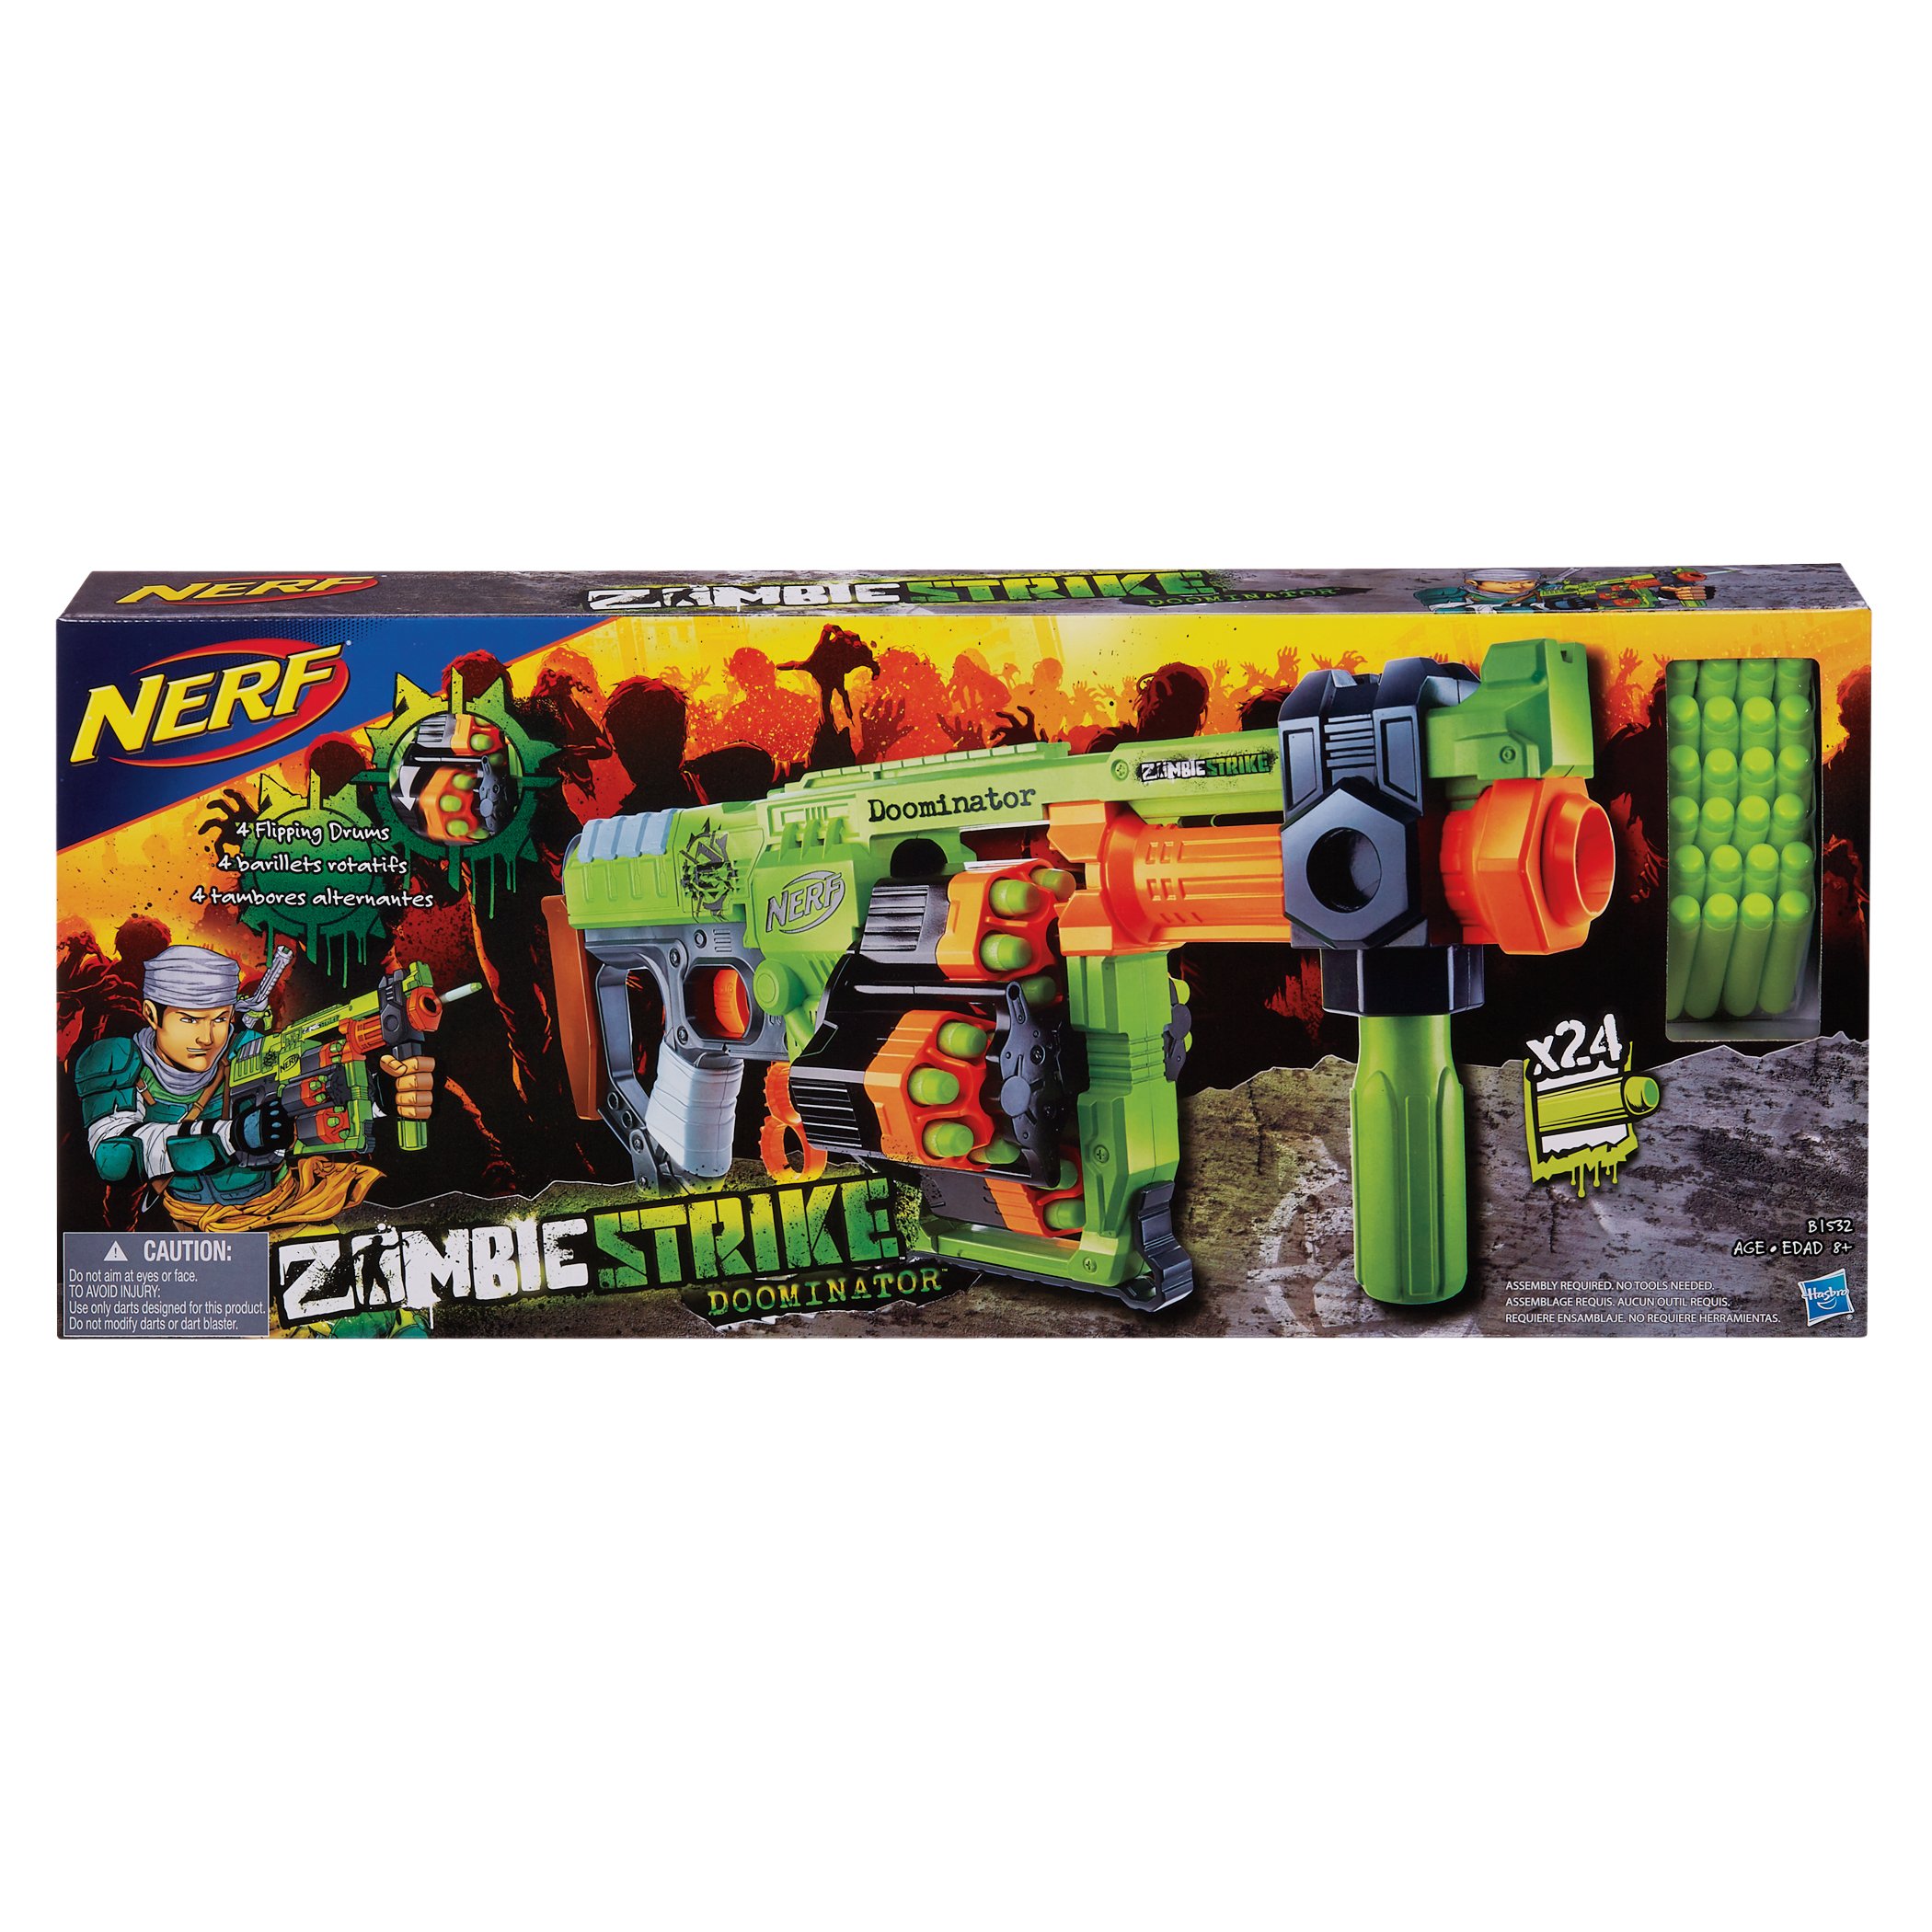 NERF Zombie Strike Doominator Blaster Toy 